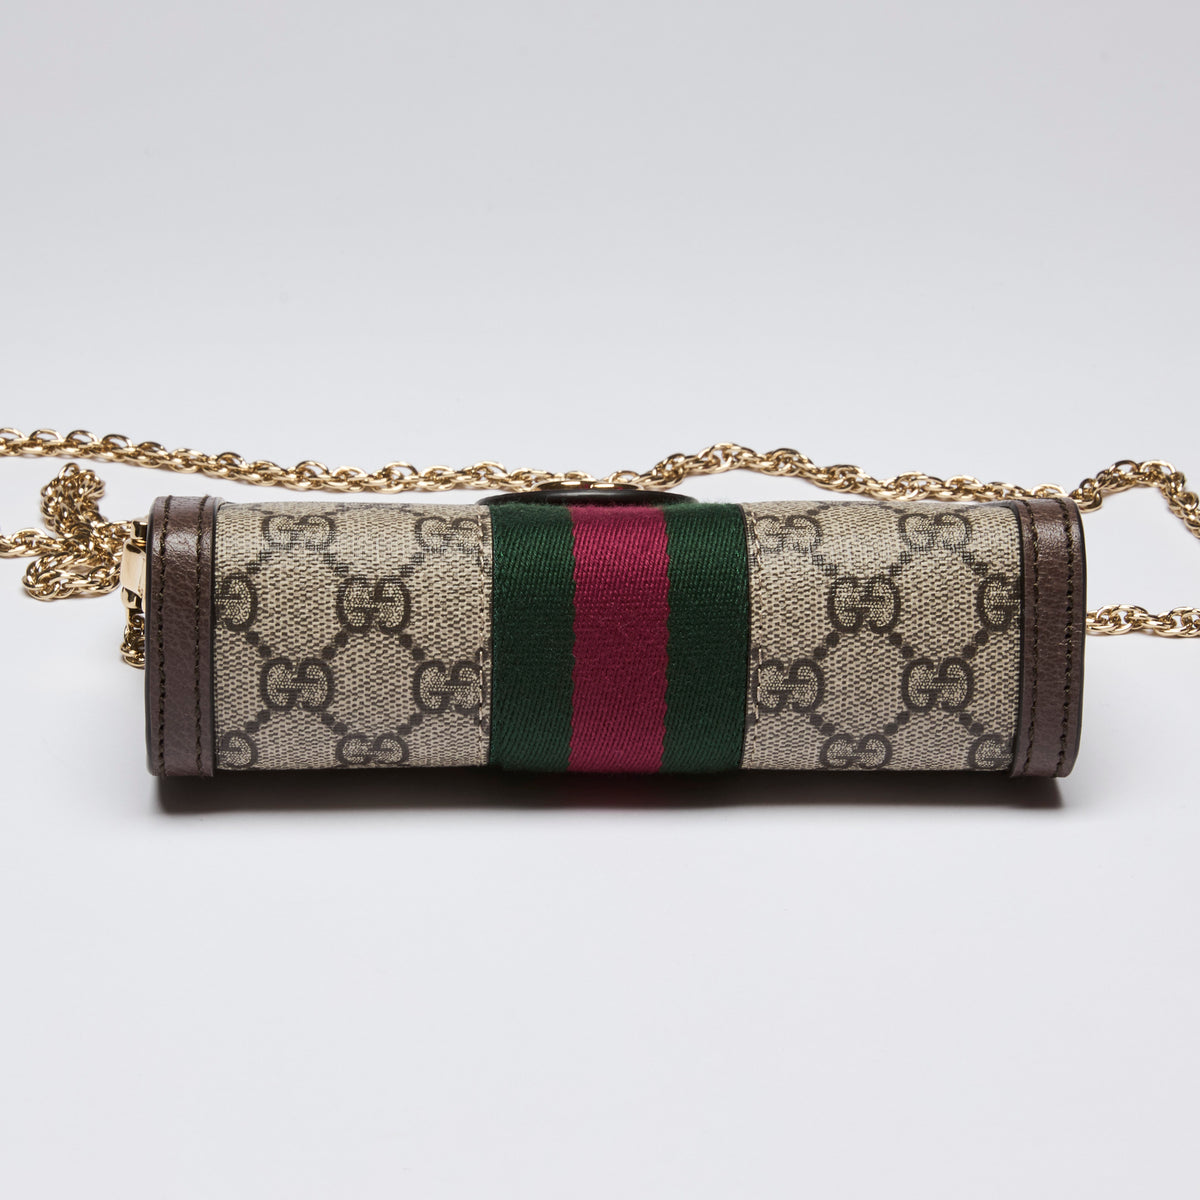  Excellent pre-Loved Stylish Gucci GG Supreme Monogram Mini Ophedia Chain Shoulder Bag  (Bottom)